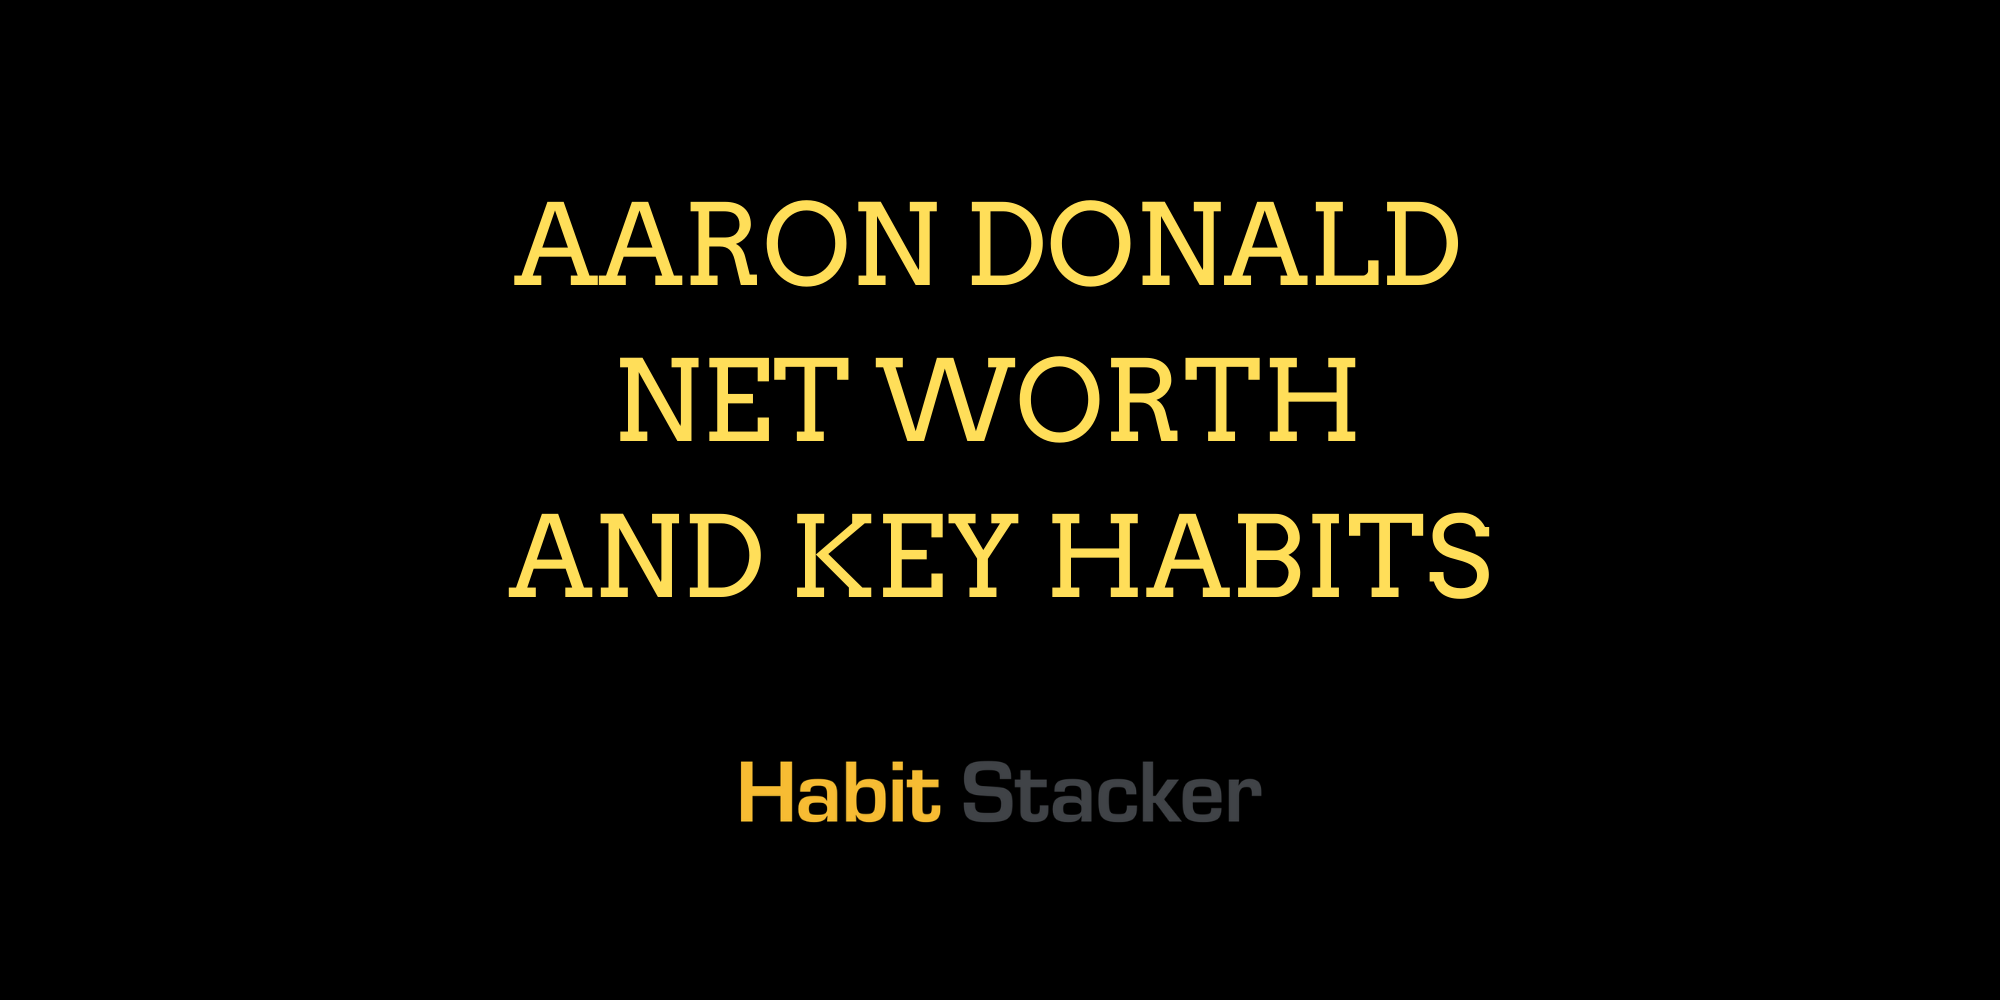 Aaron Donald Net Worth and Key Habits